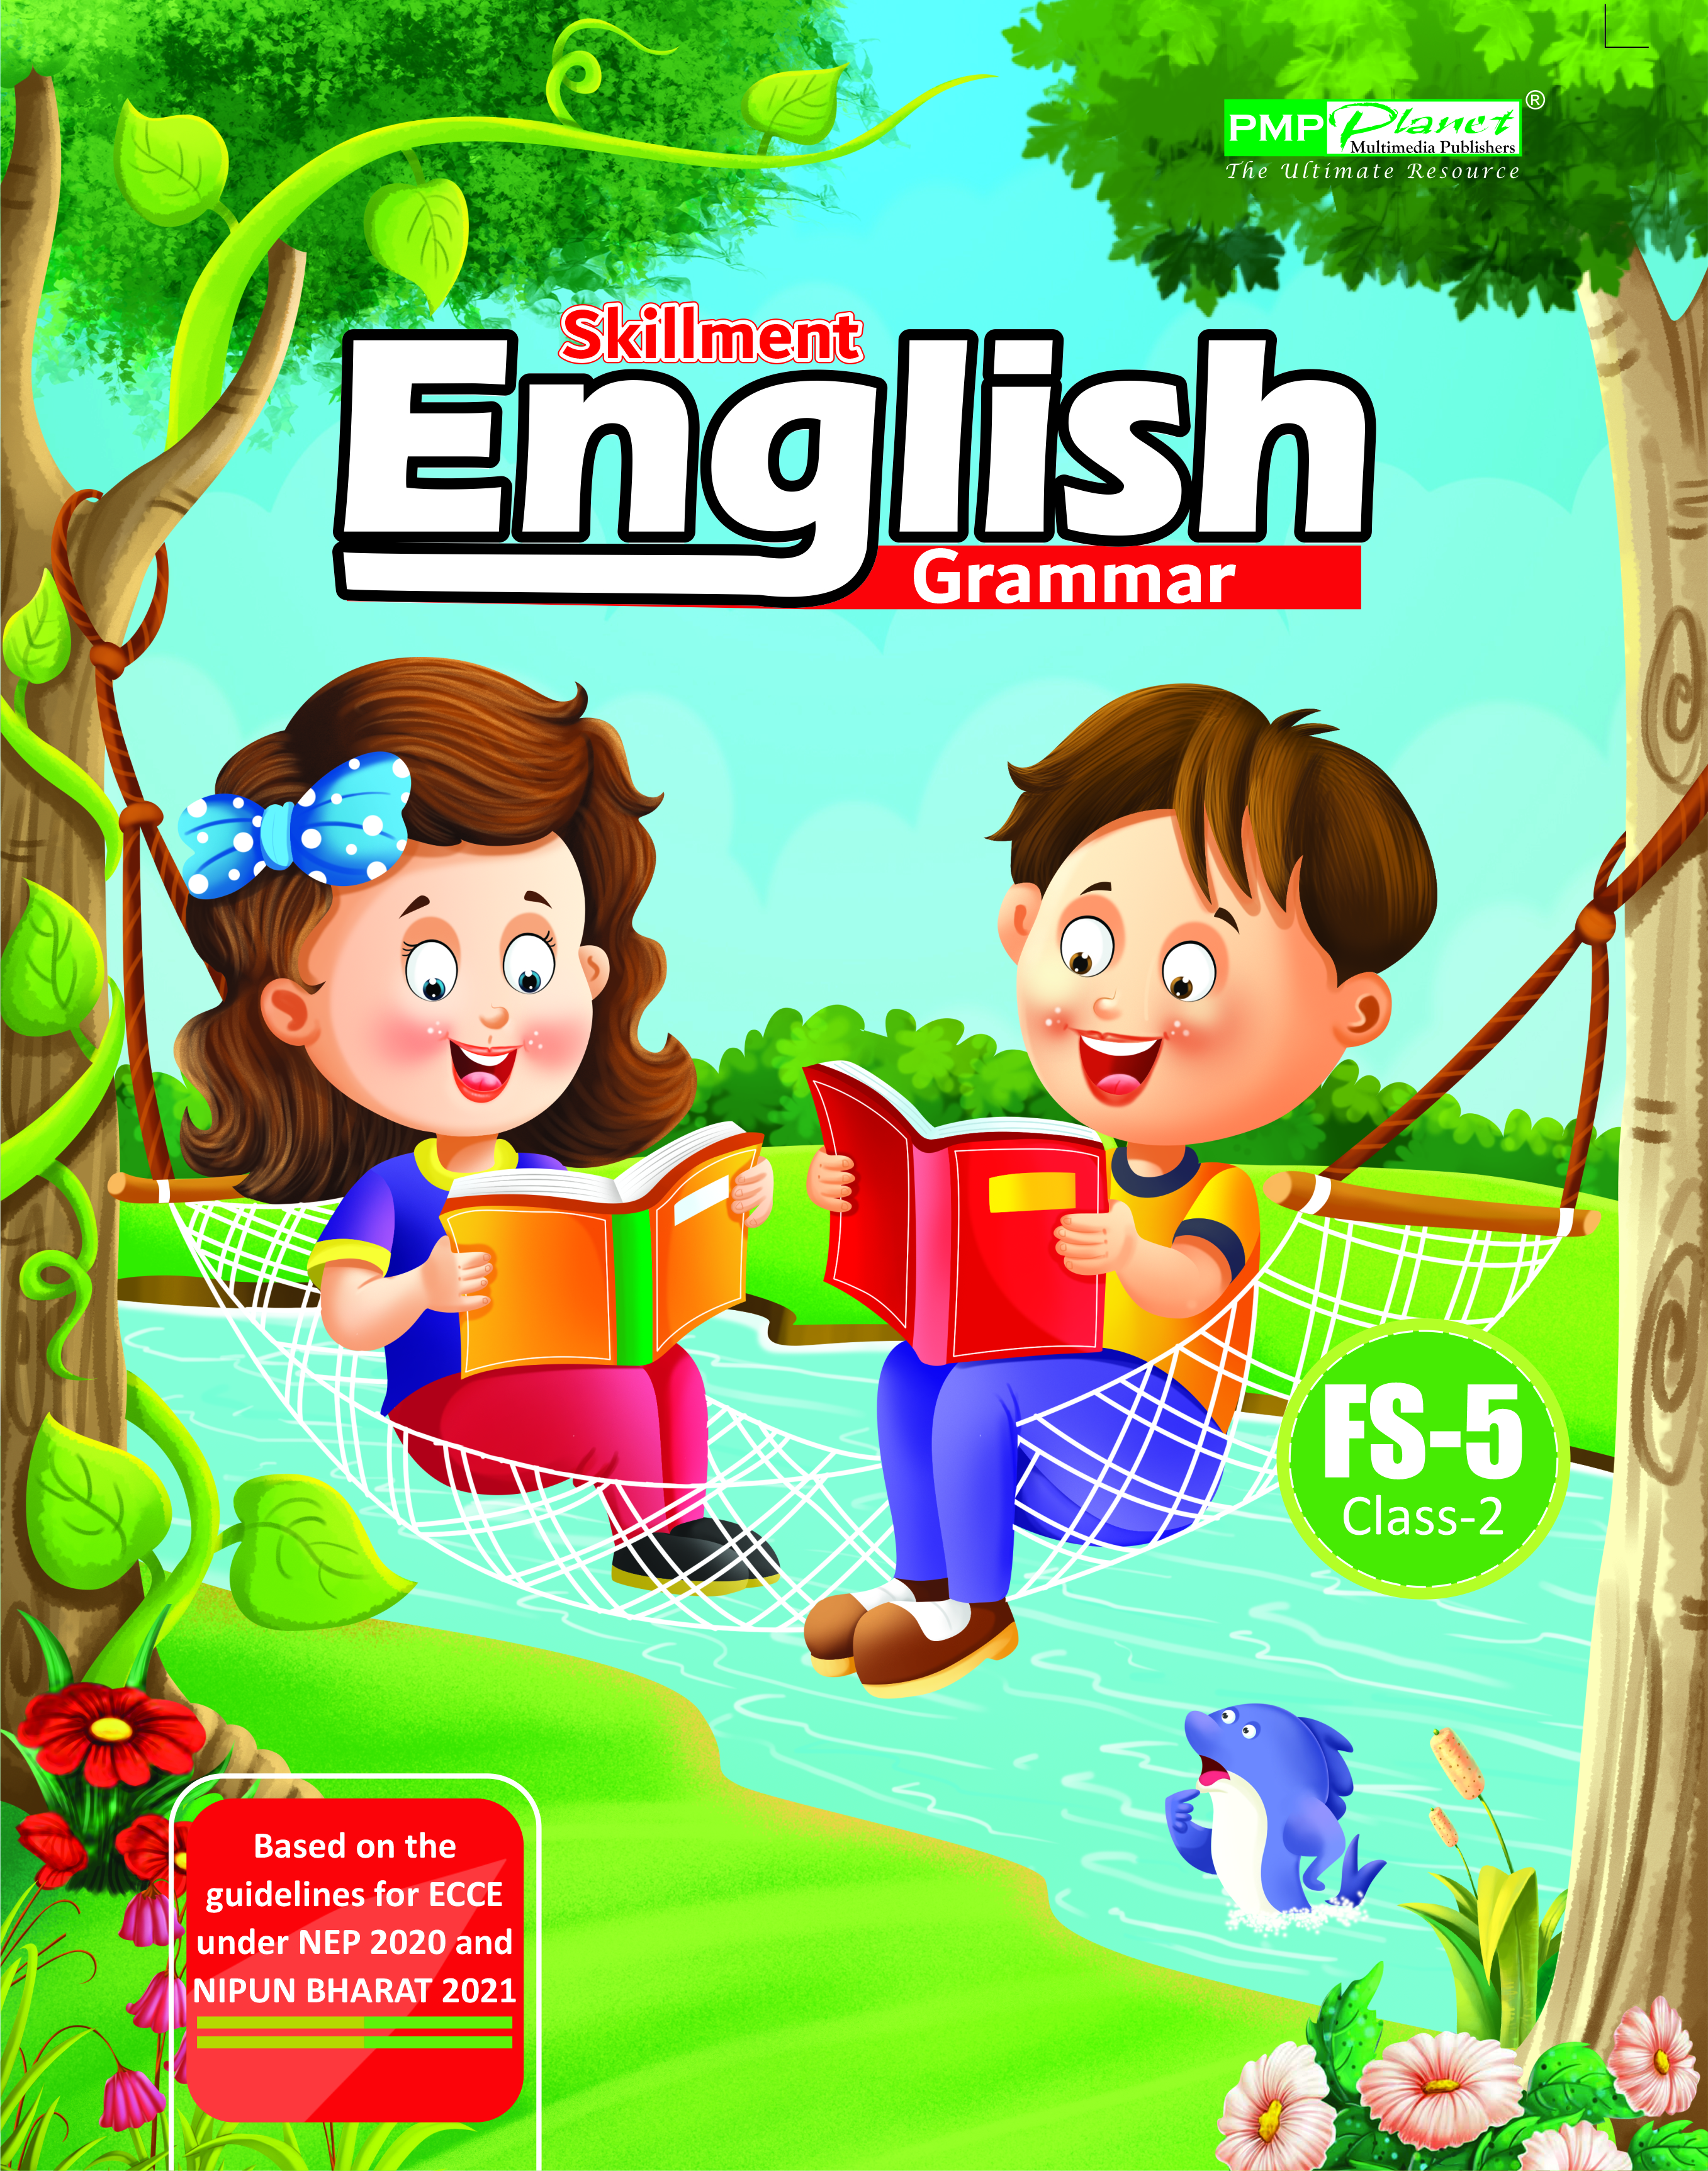 English Grammar textbook